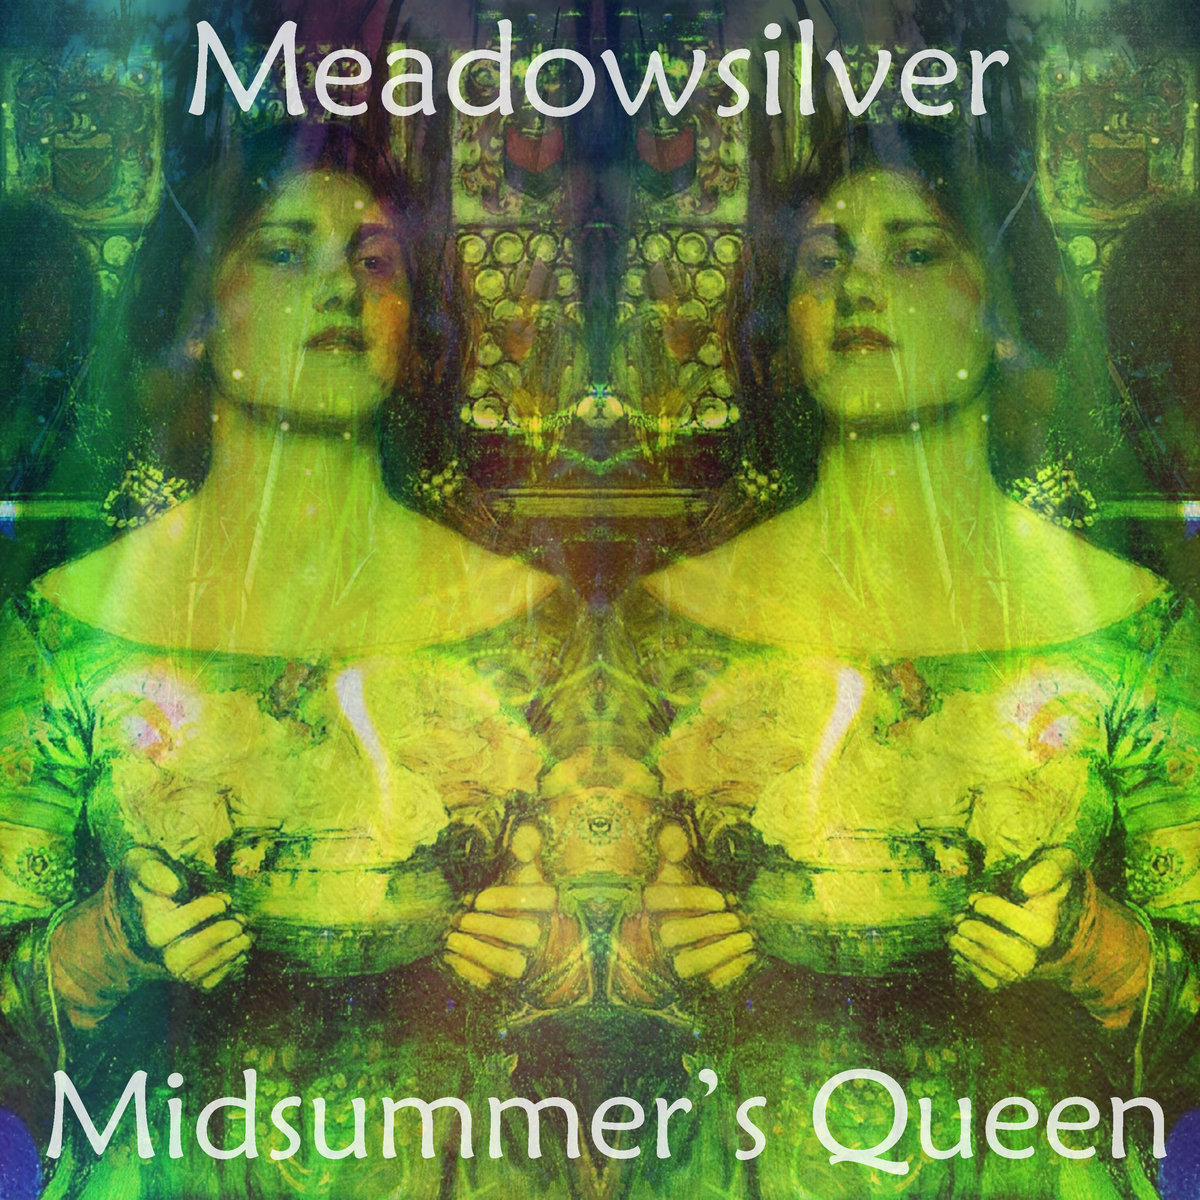 Midsummer's Queen by Meadowsilver